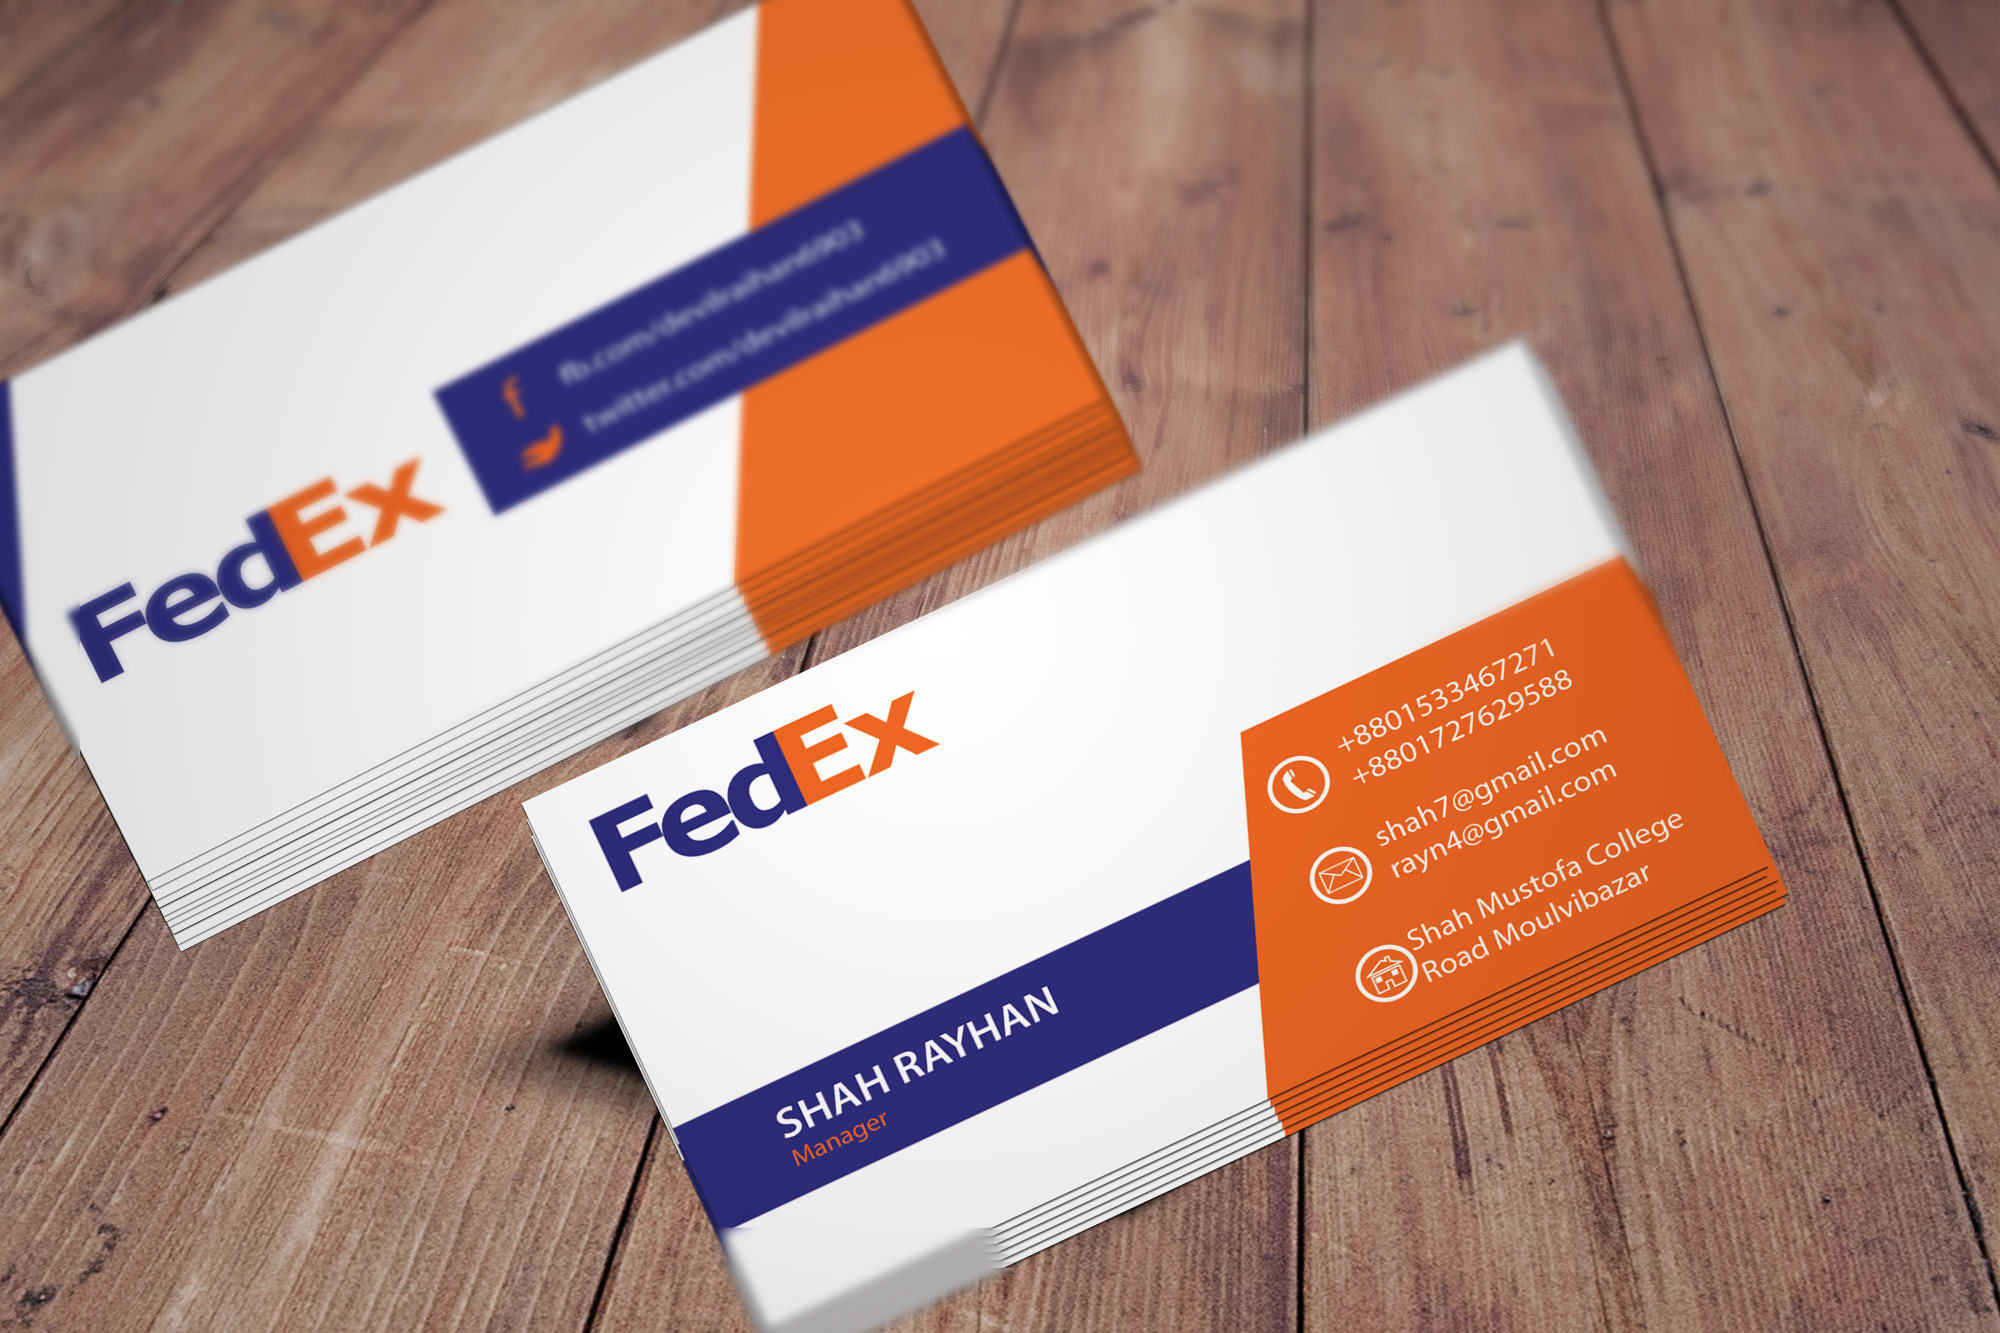 fedex business cards 1